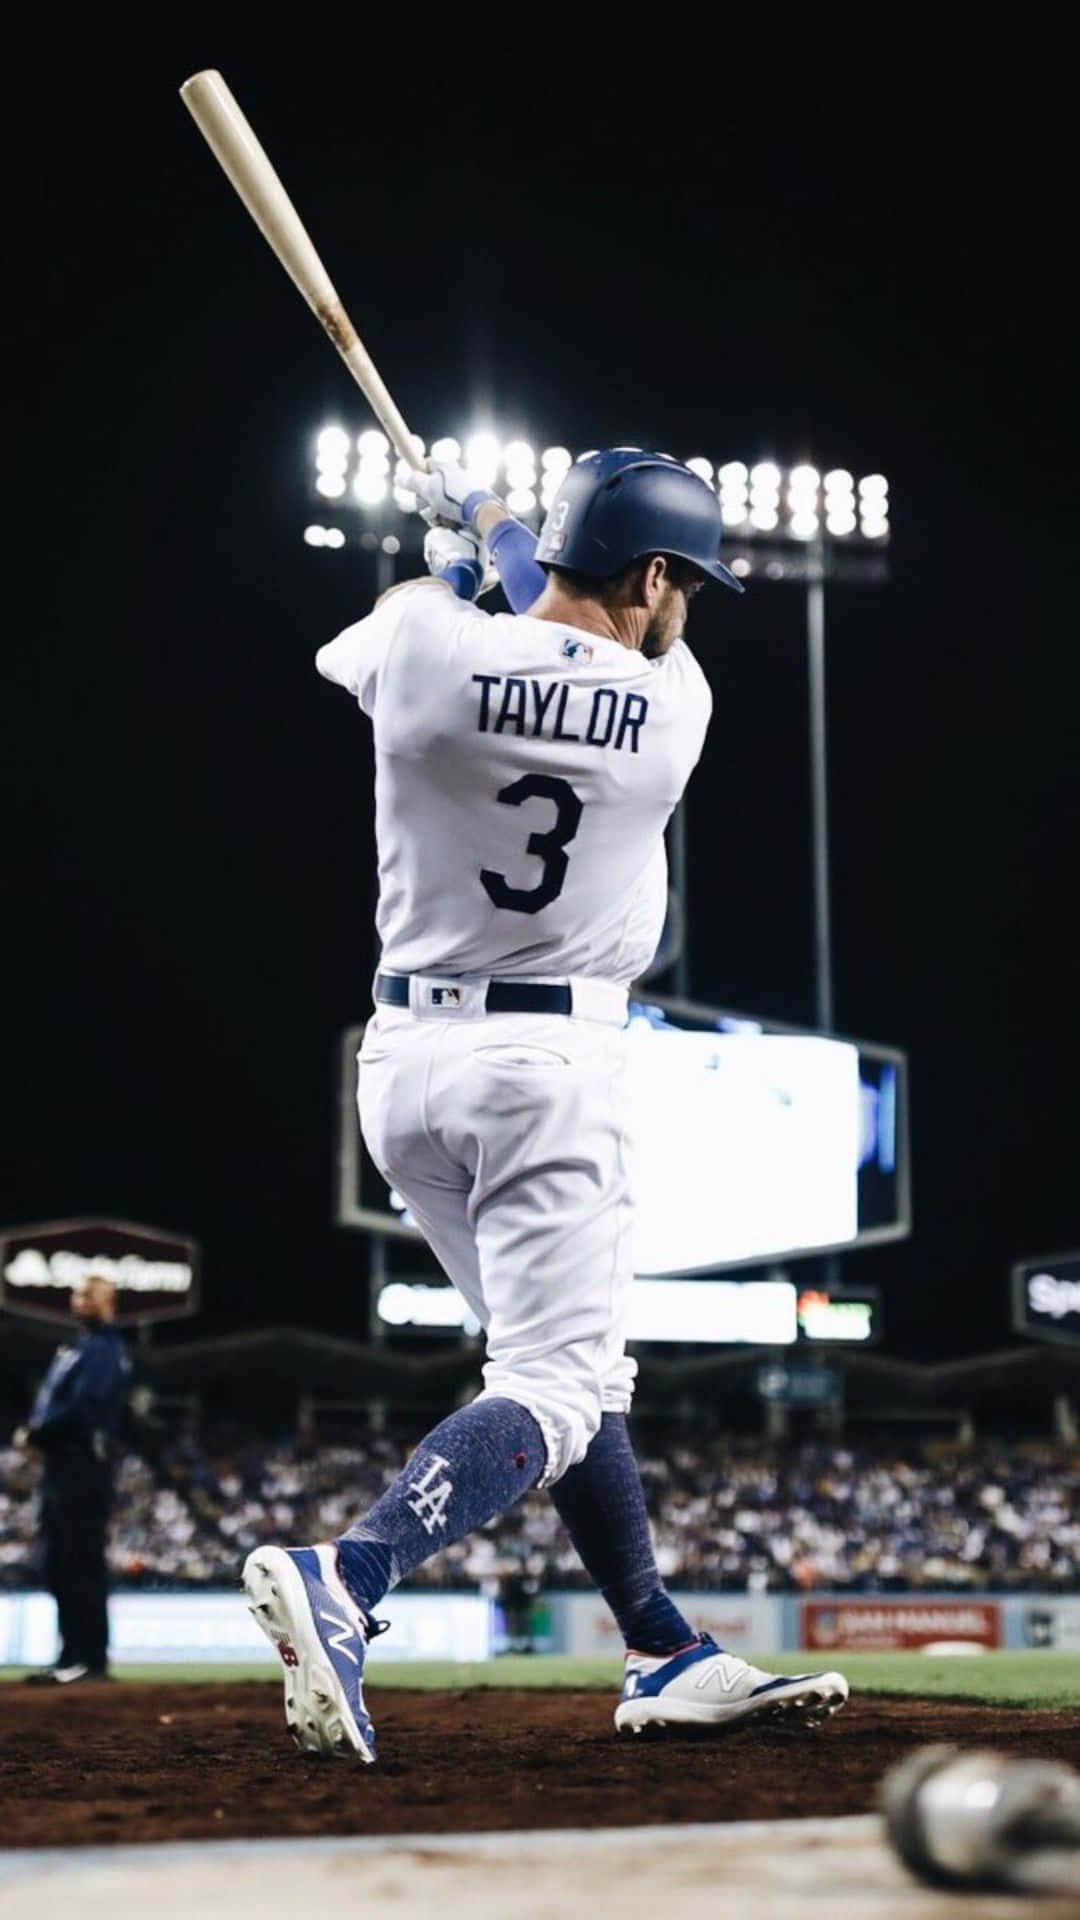 Dodgers Player Taylor Batting Stance Wallpaper